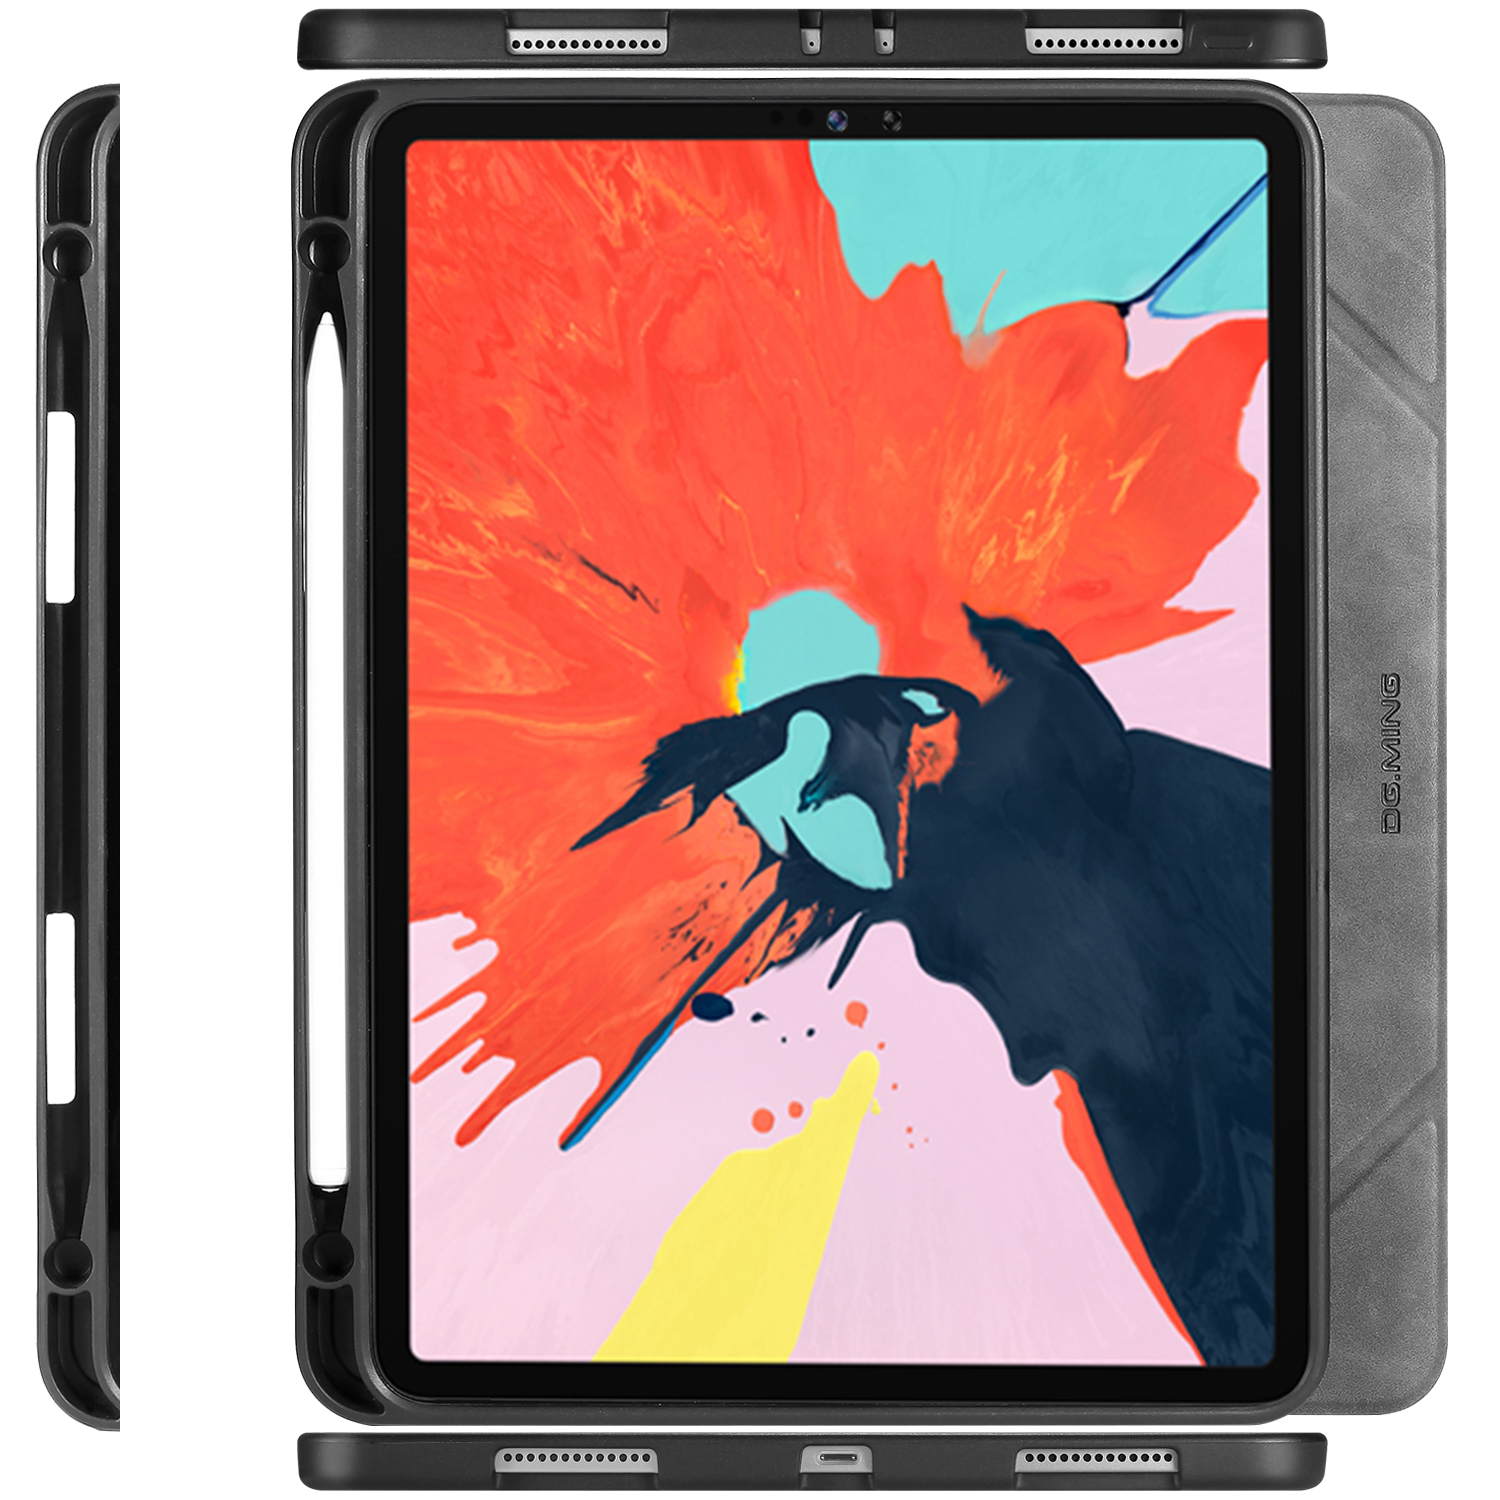 DG.MING Retro Style fodral till iPad Pro 11 (2020), grå